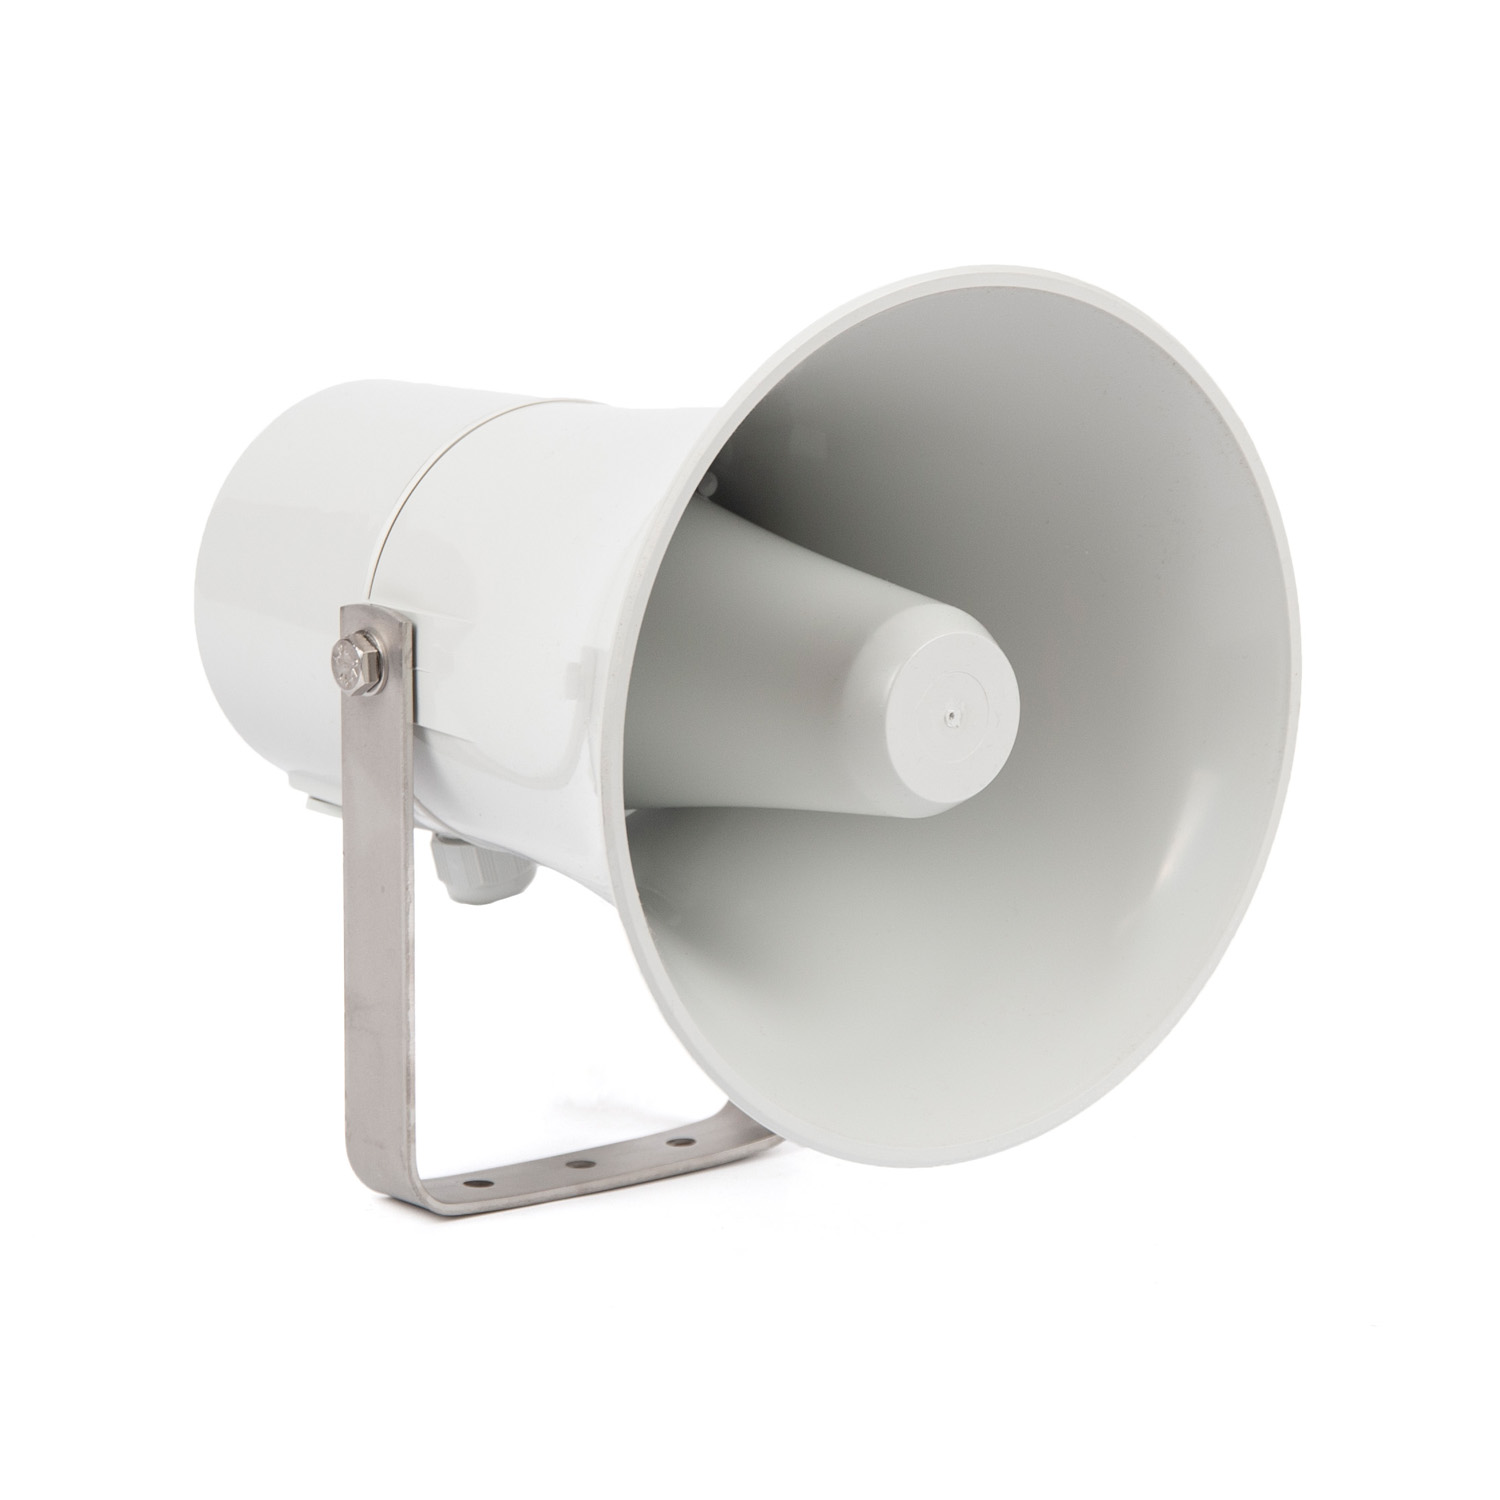 STC-1004 Horn loudspeaker 15W/100V, IP67 with ceramic terminals / fuse